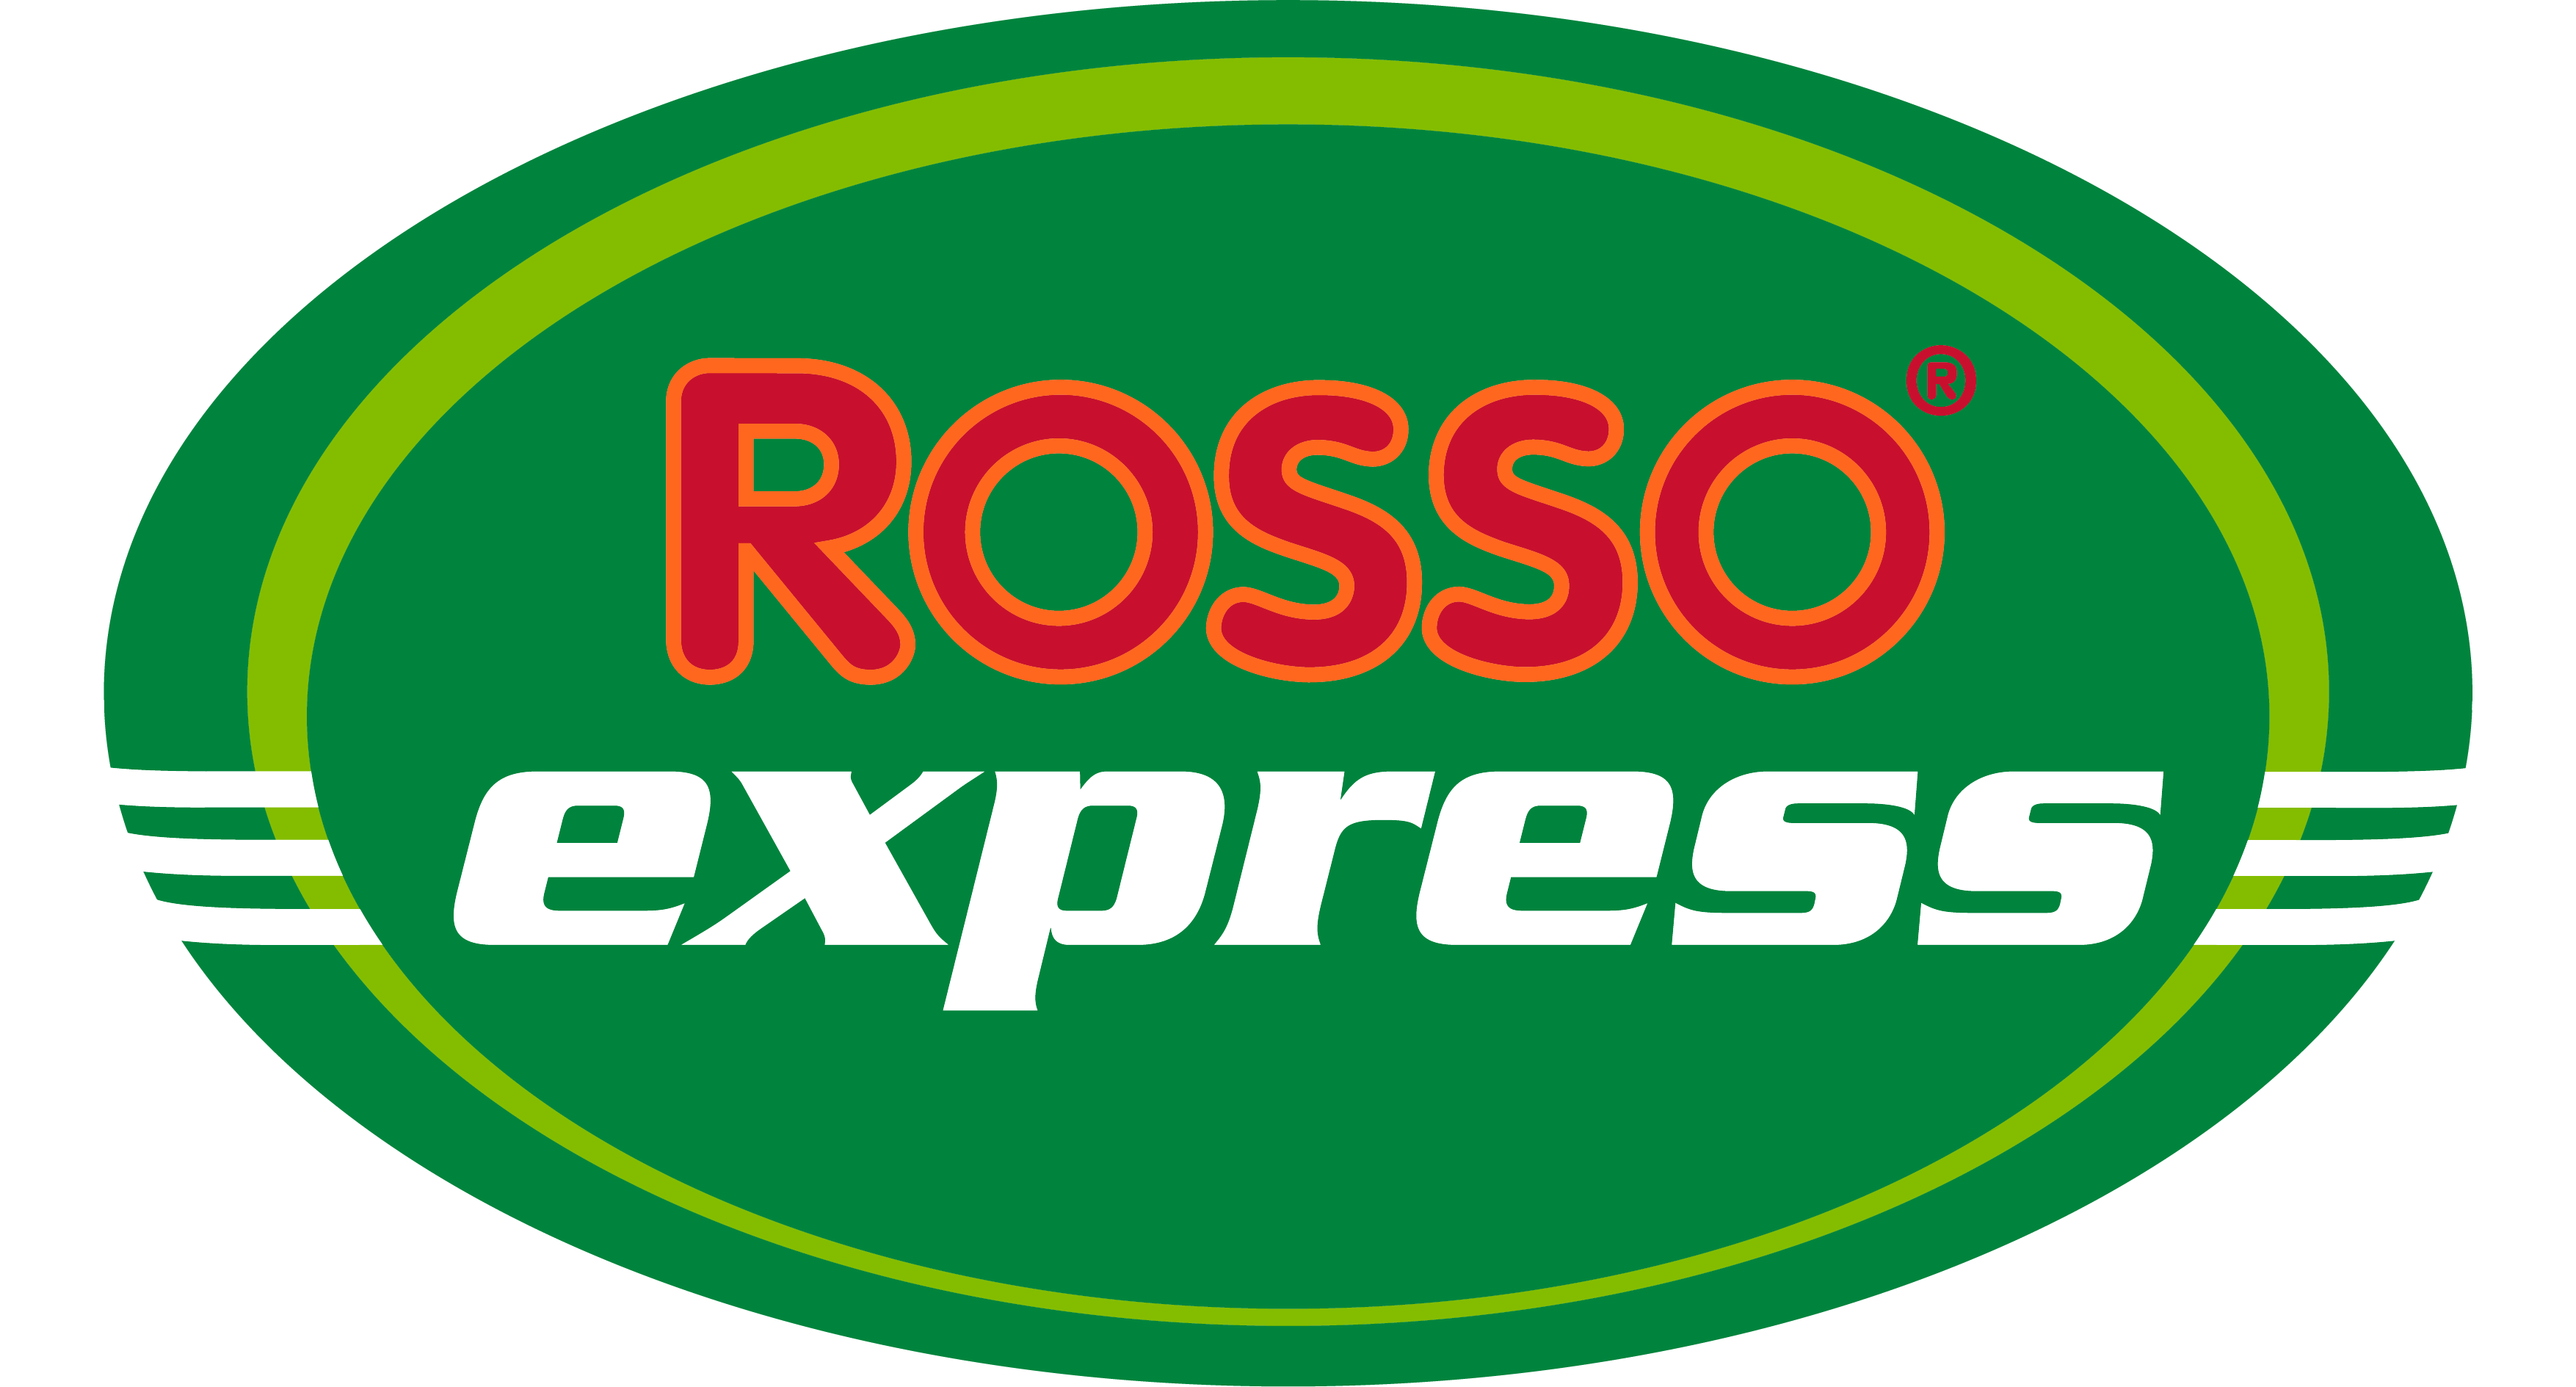 Rosso Express